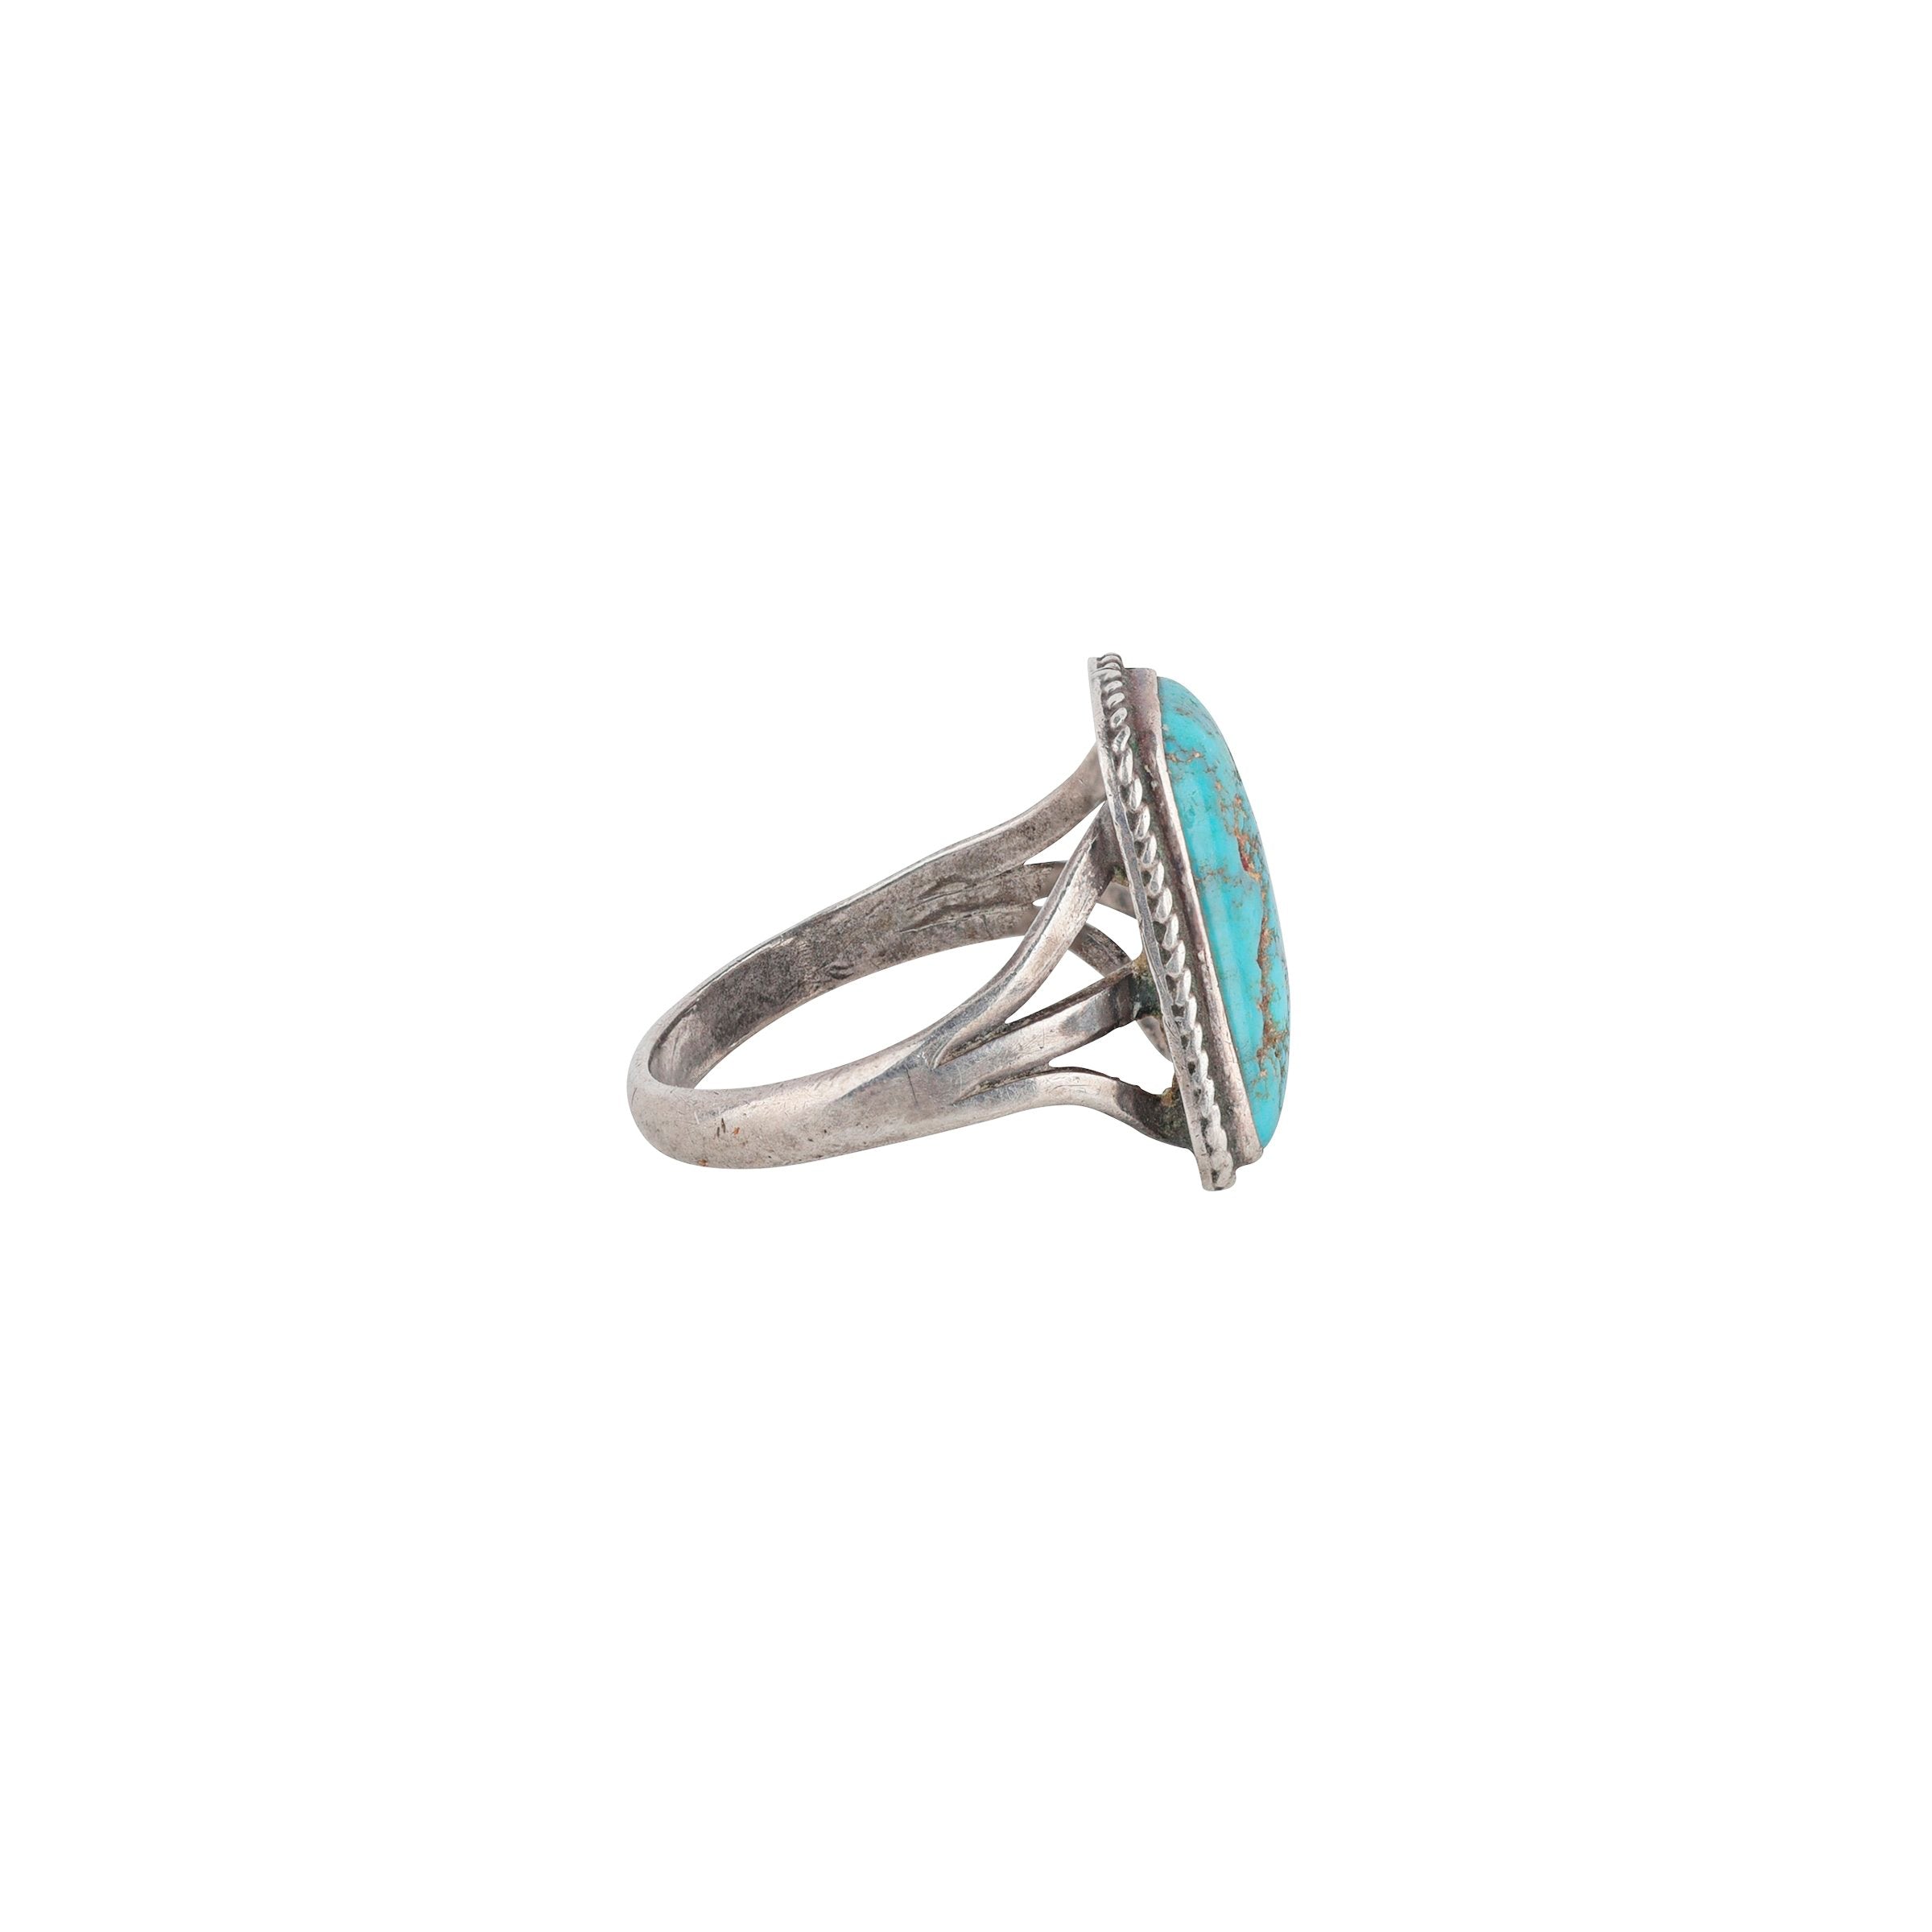 Vintage Navajo Turquoise Ring - Size 9 1/2